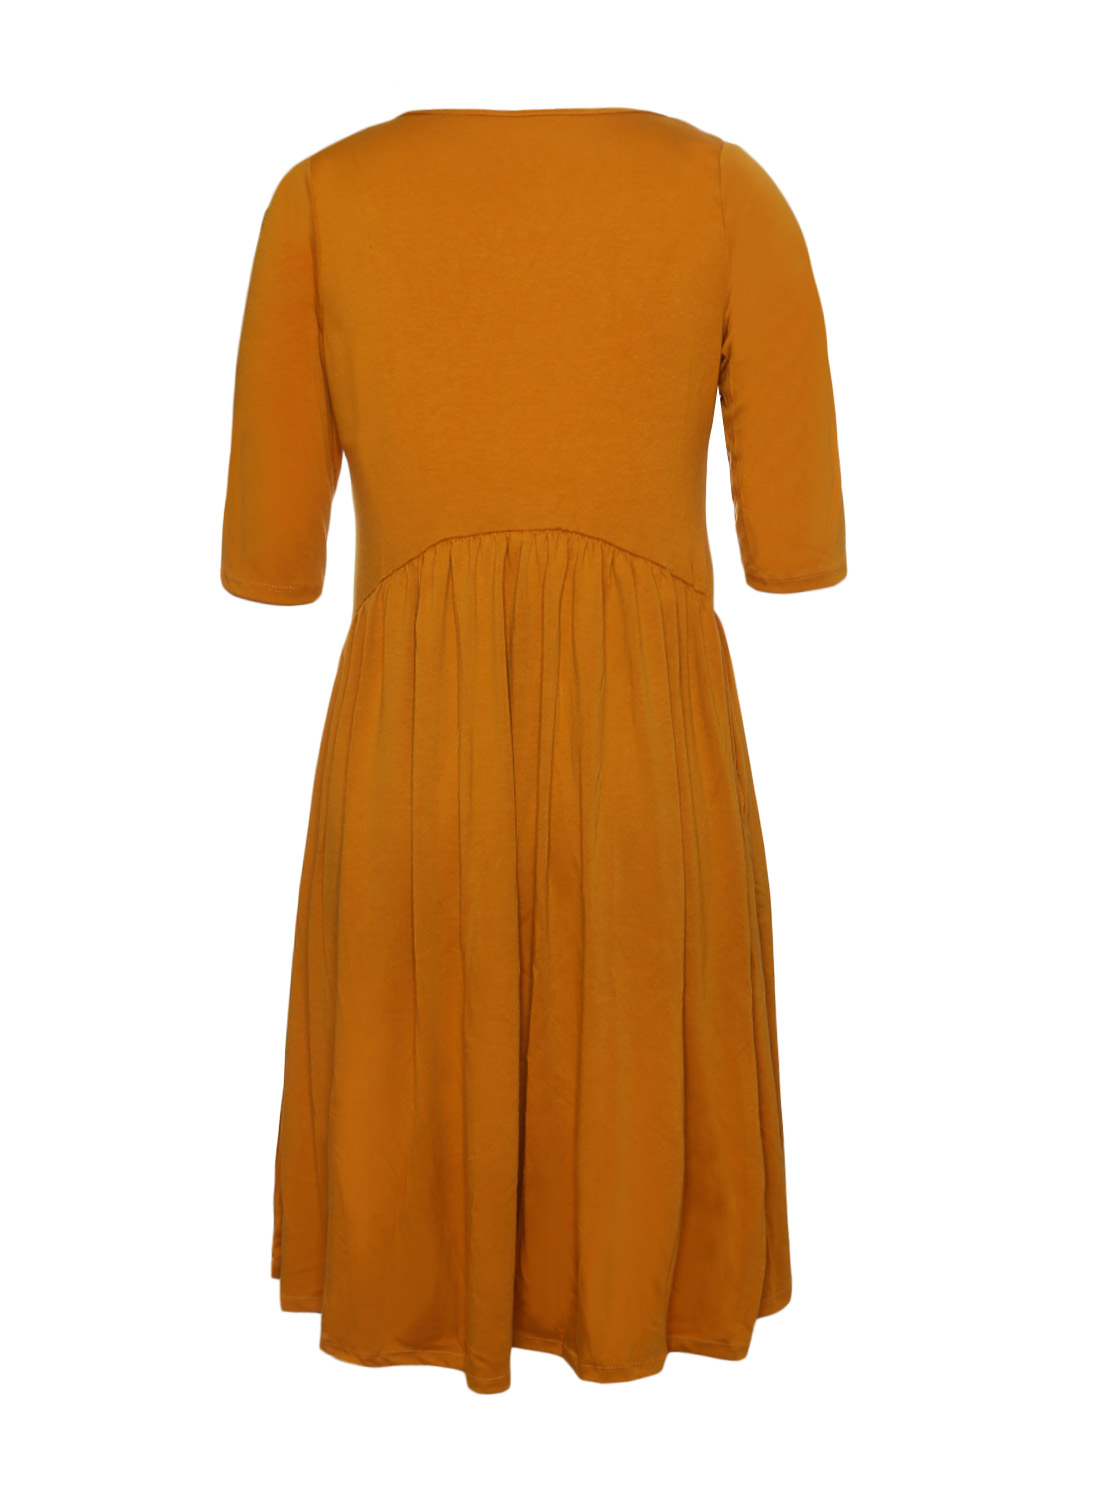 BY61653-7 Yellow  Sleeve Draped Swing Dress